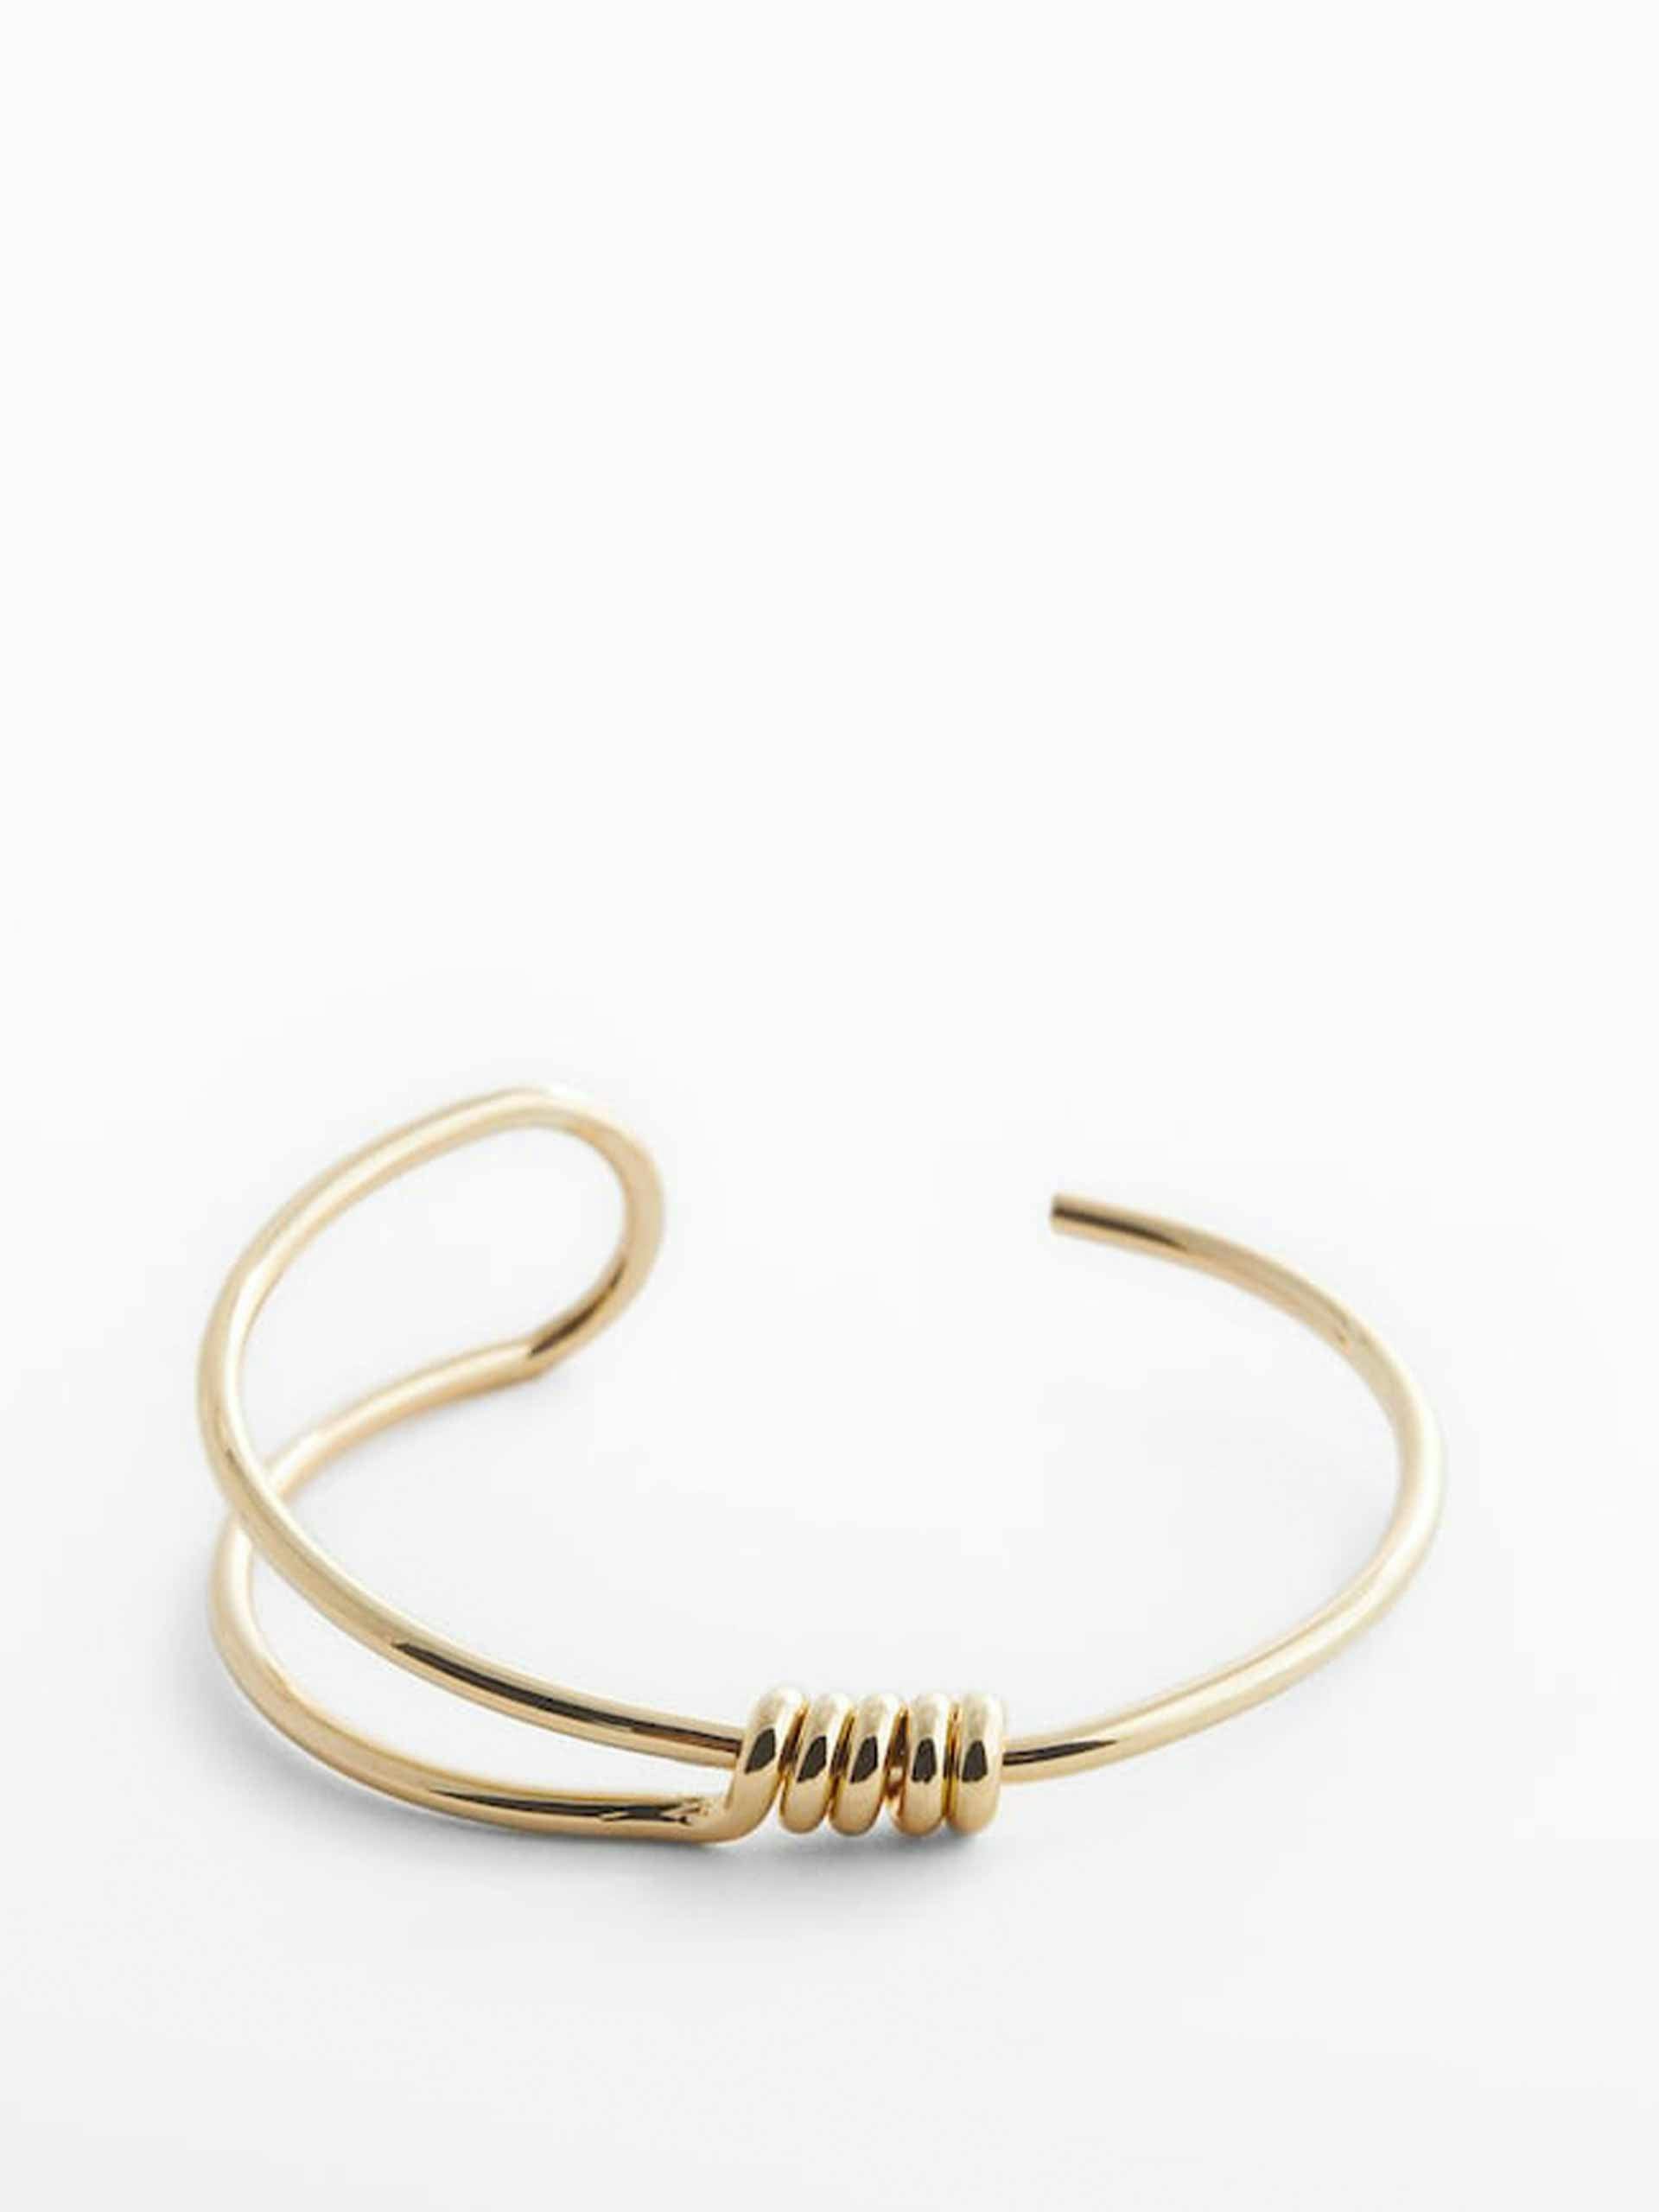 Brass interlocking bracelet